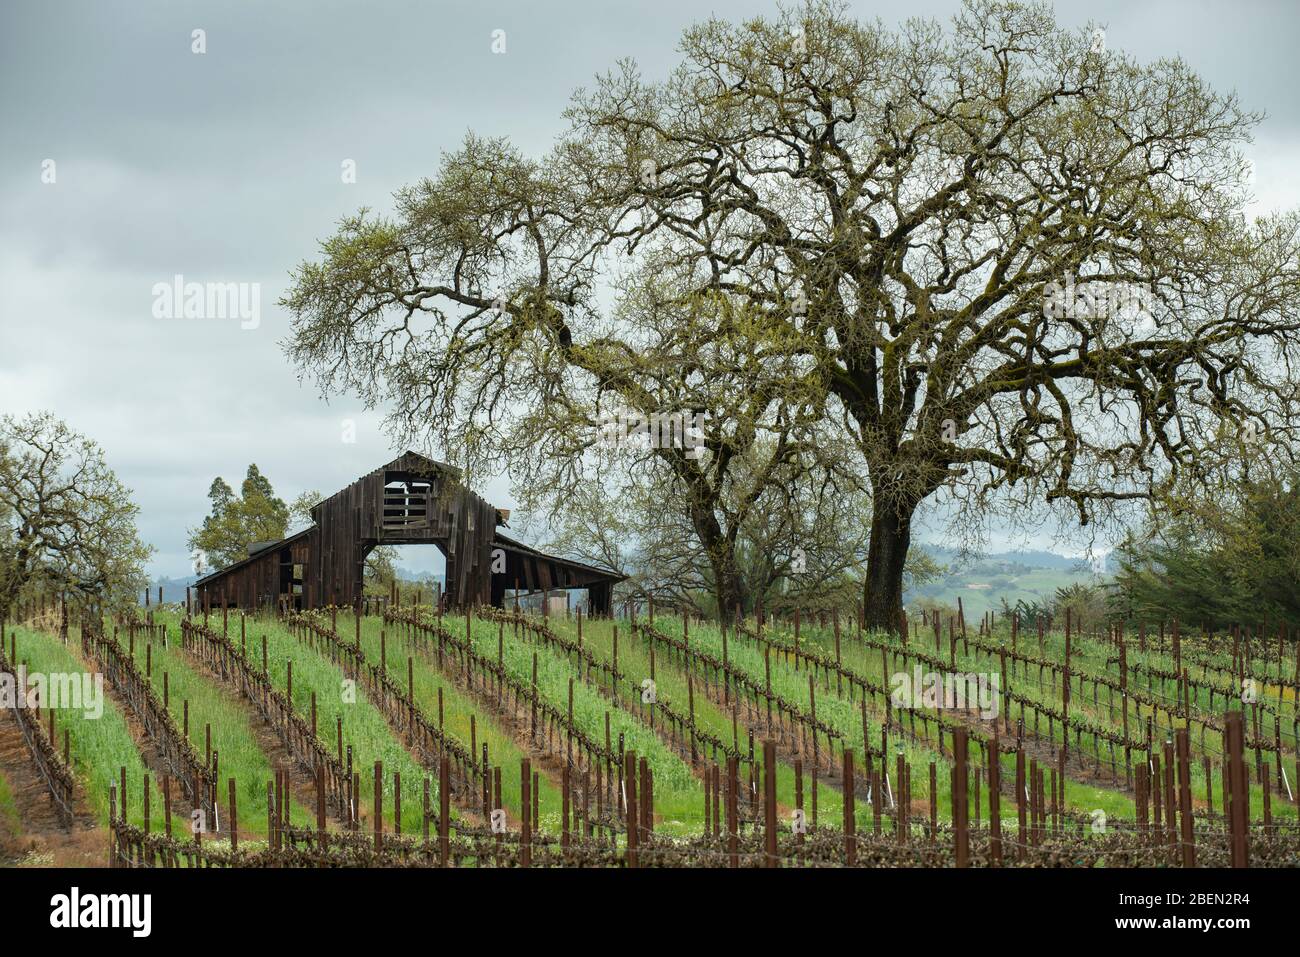 A barn and vinyard in northern California Stock Photo